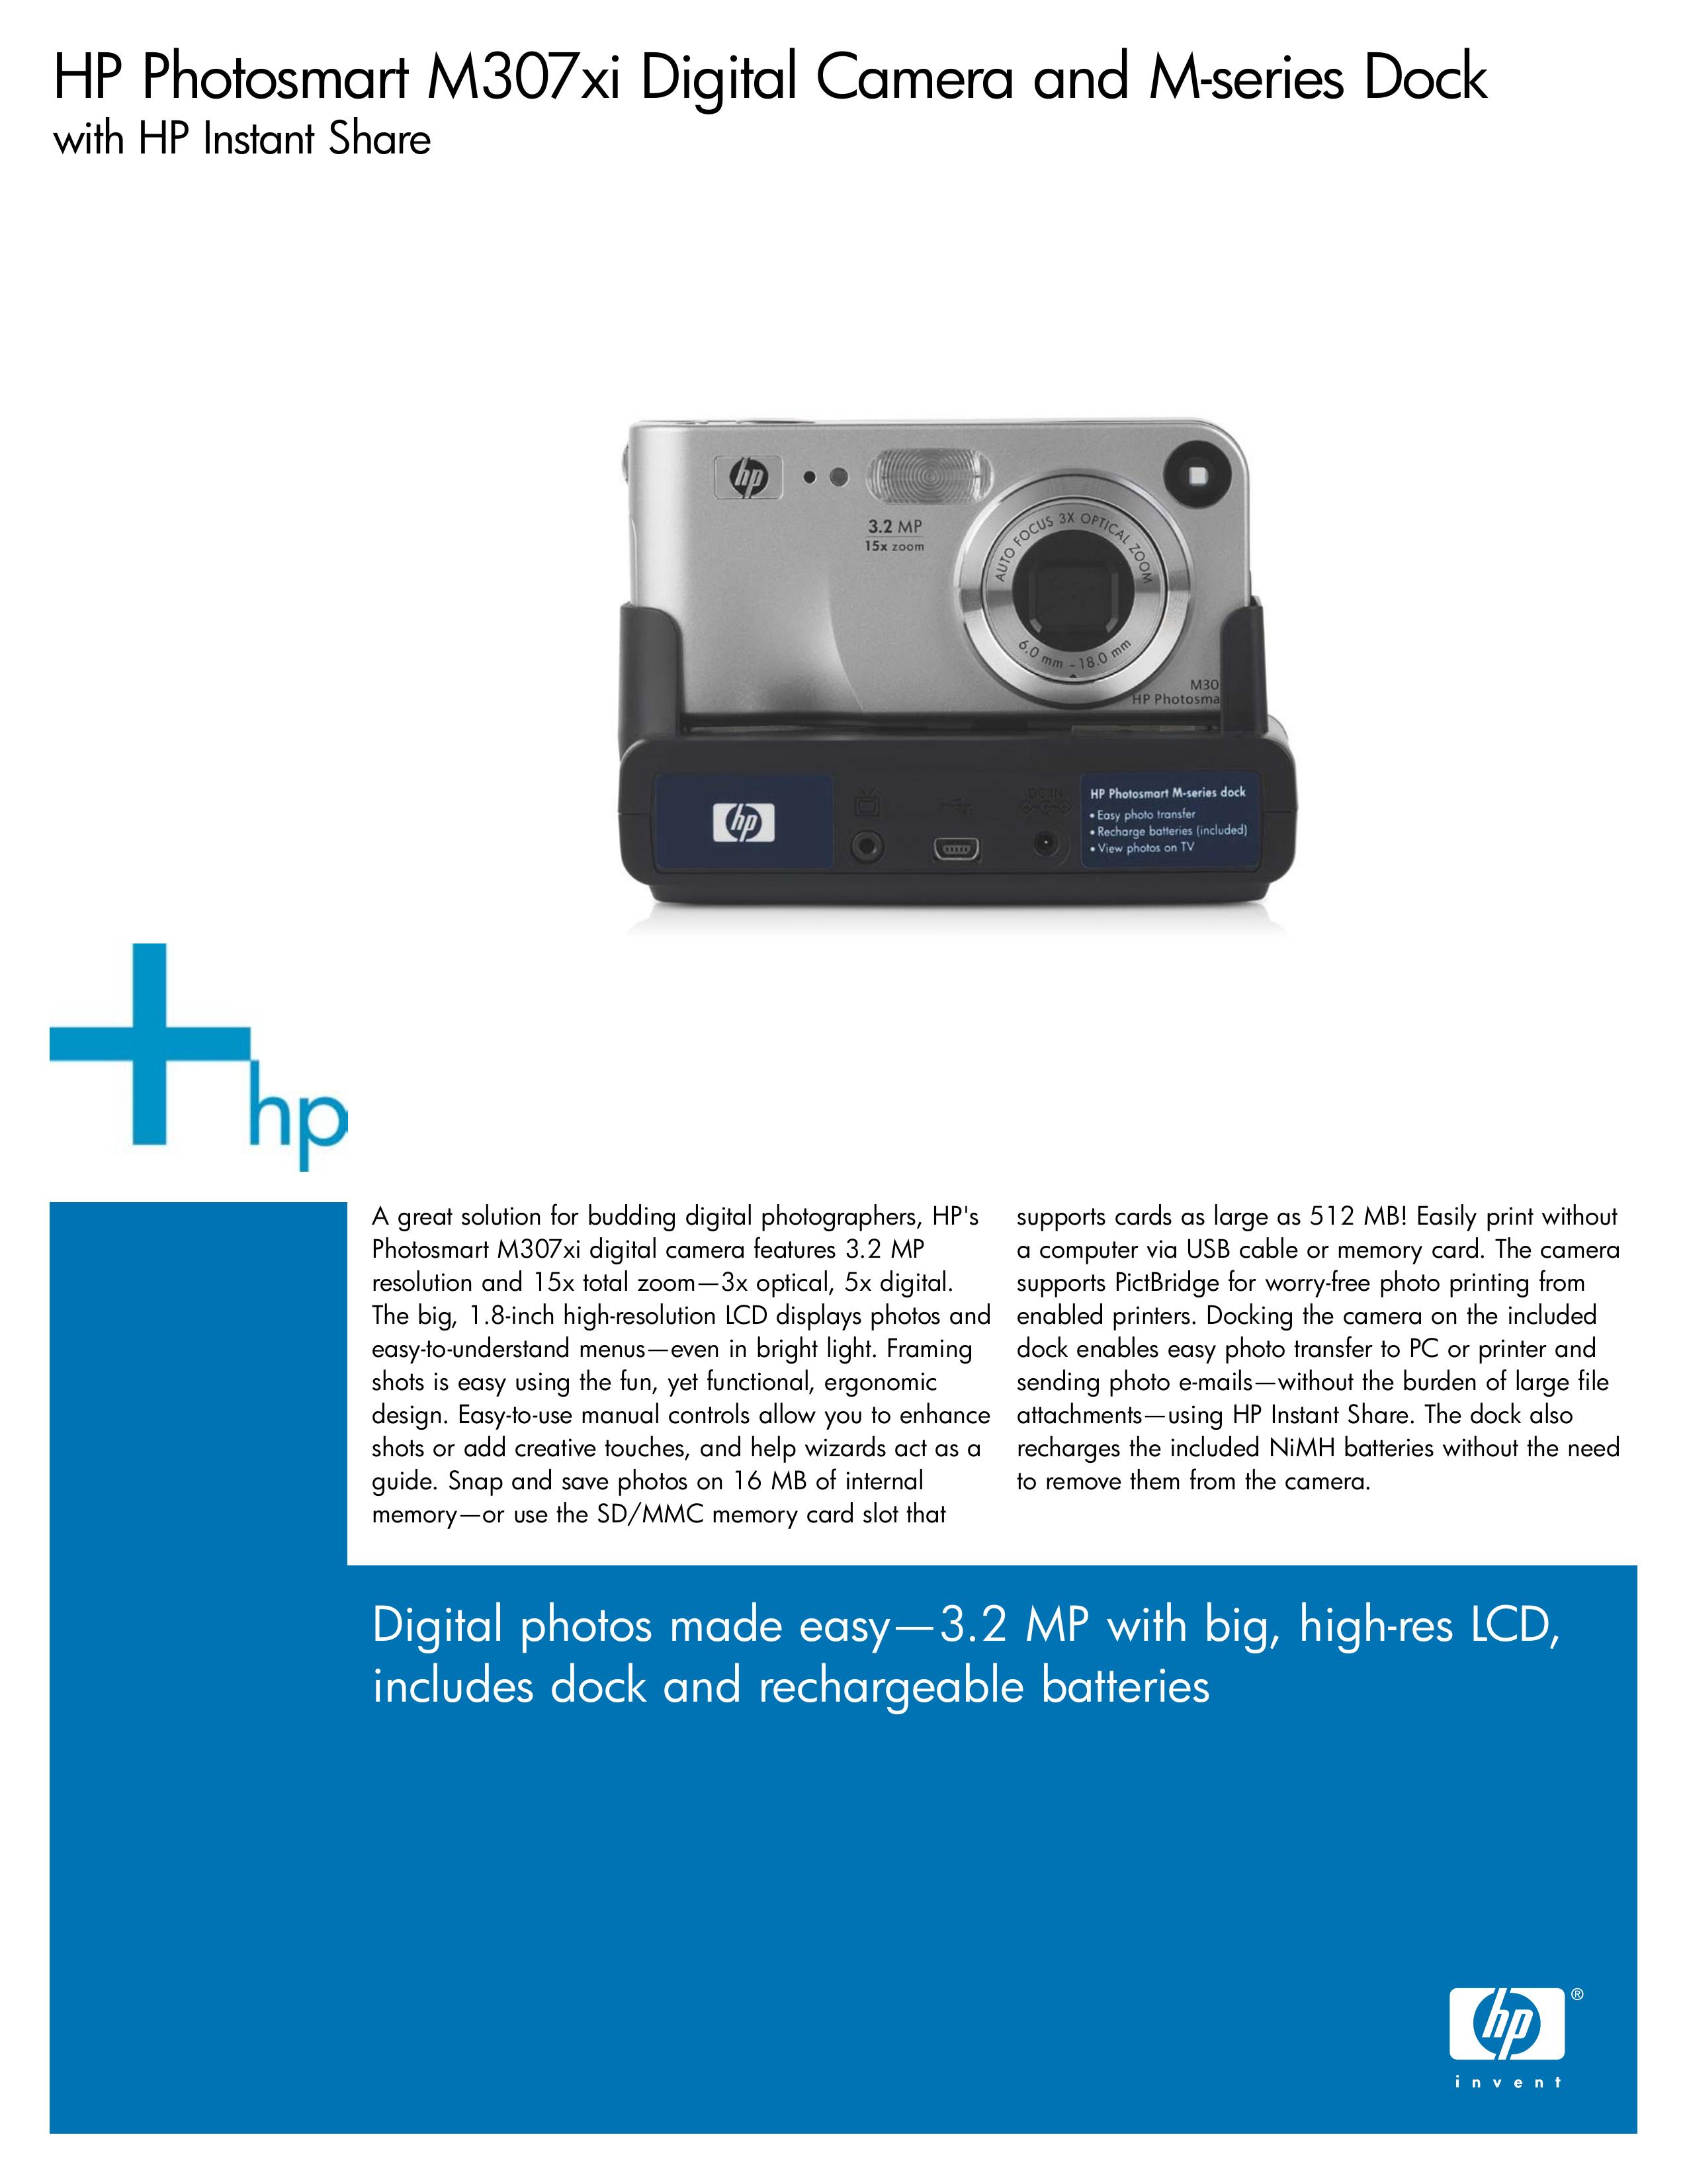 HP (Hewlett-Packard) M307xi Digital Camera User Manual